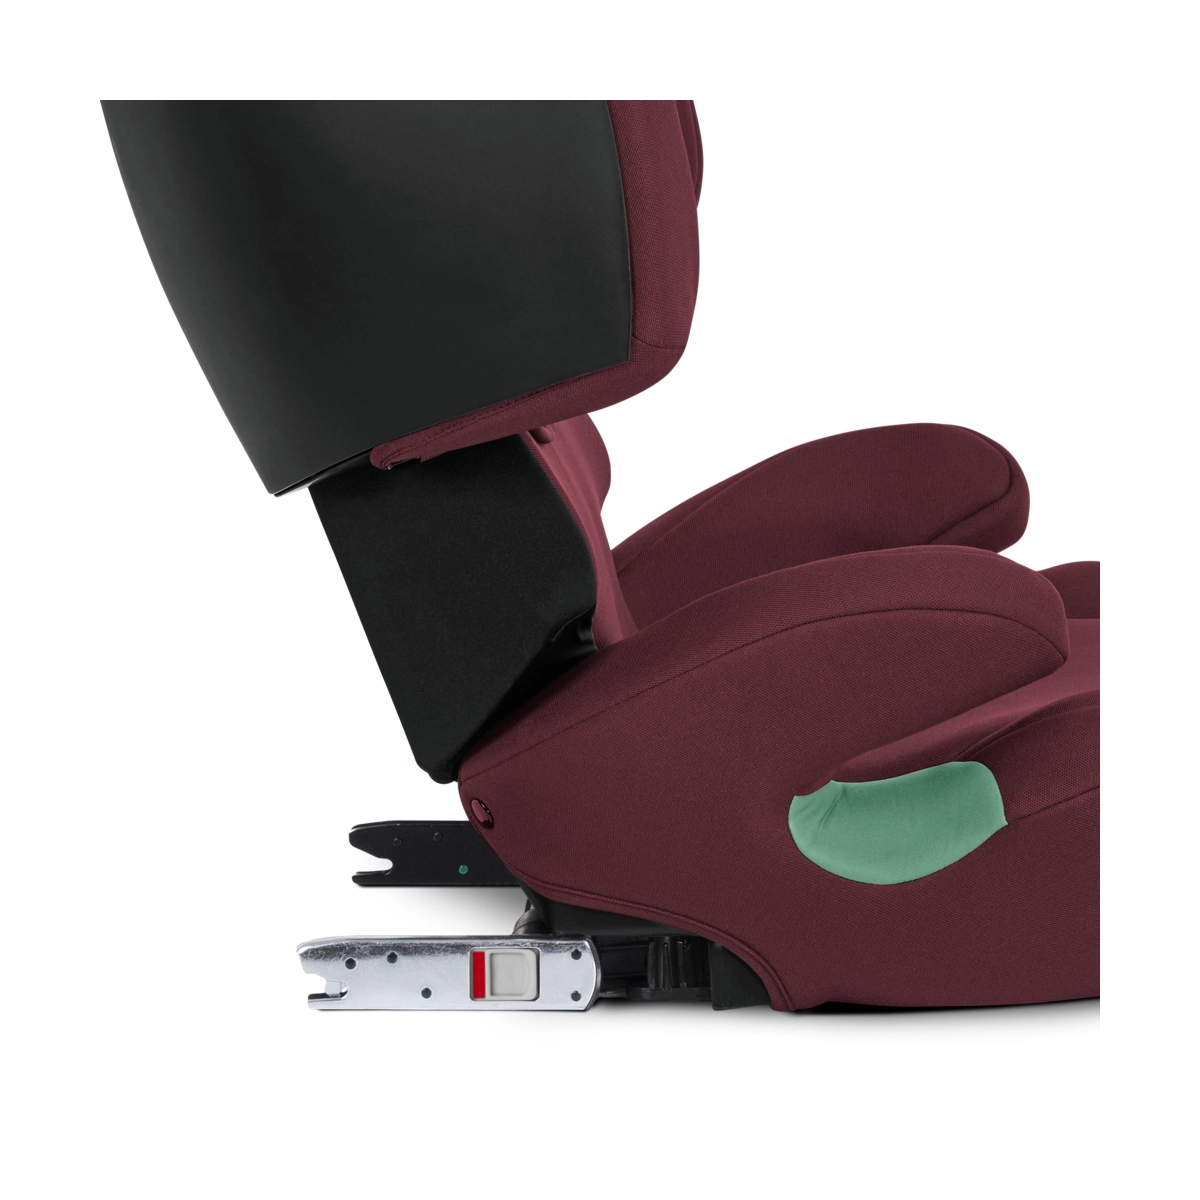 Cybex Solution X-Fix Group 2/3 ISOFIX Car Seat